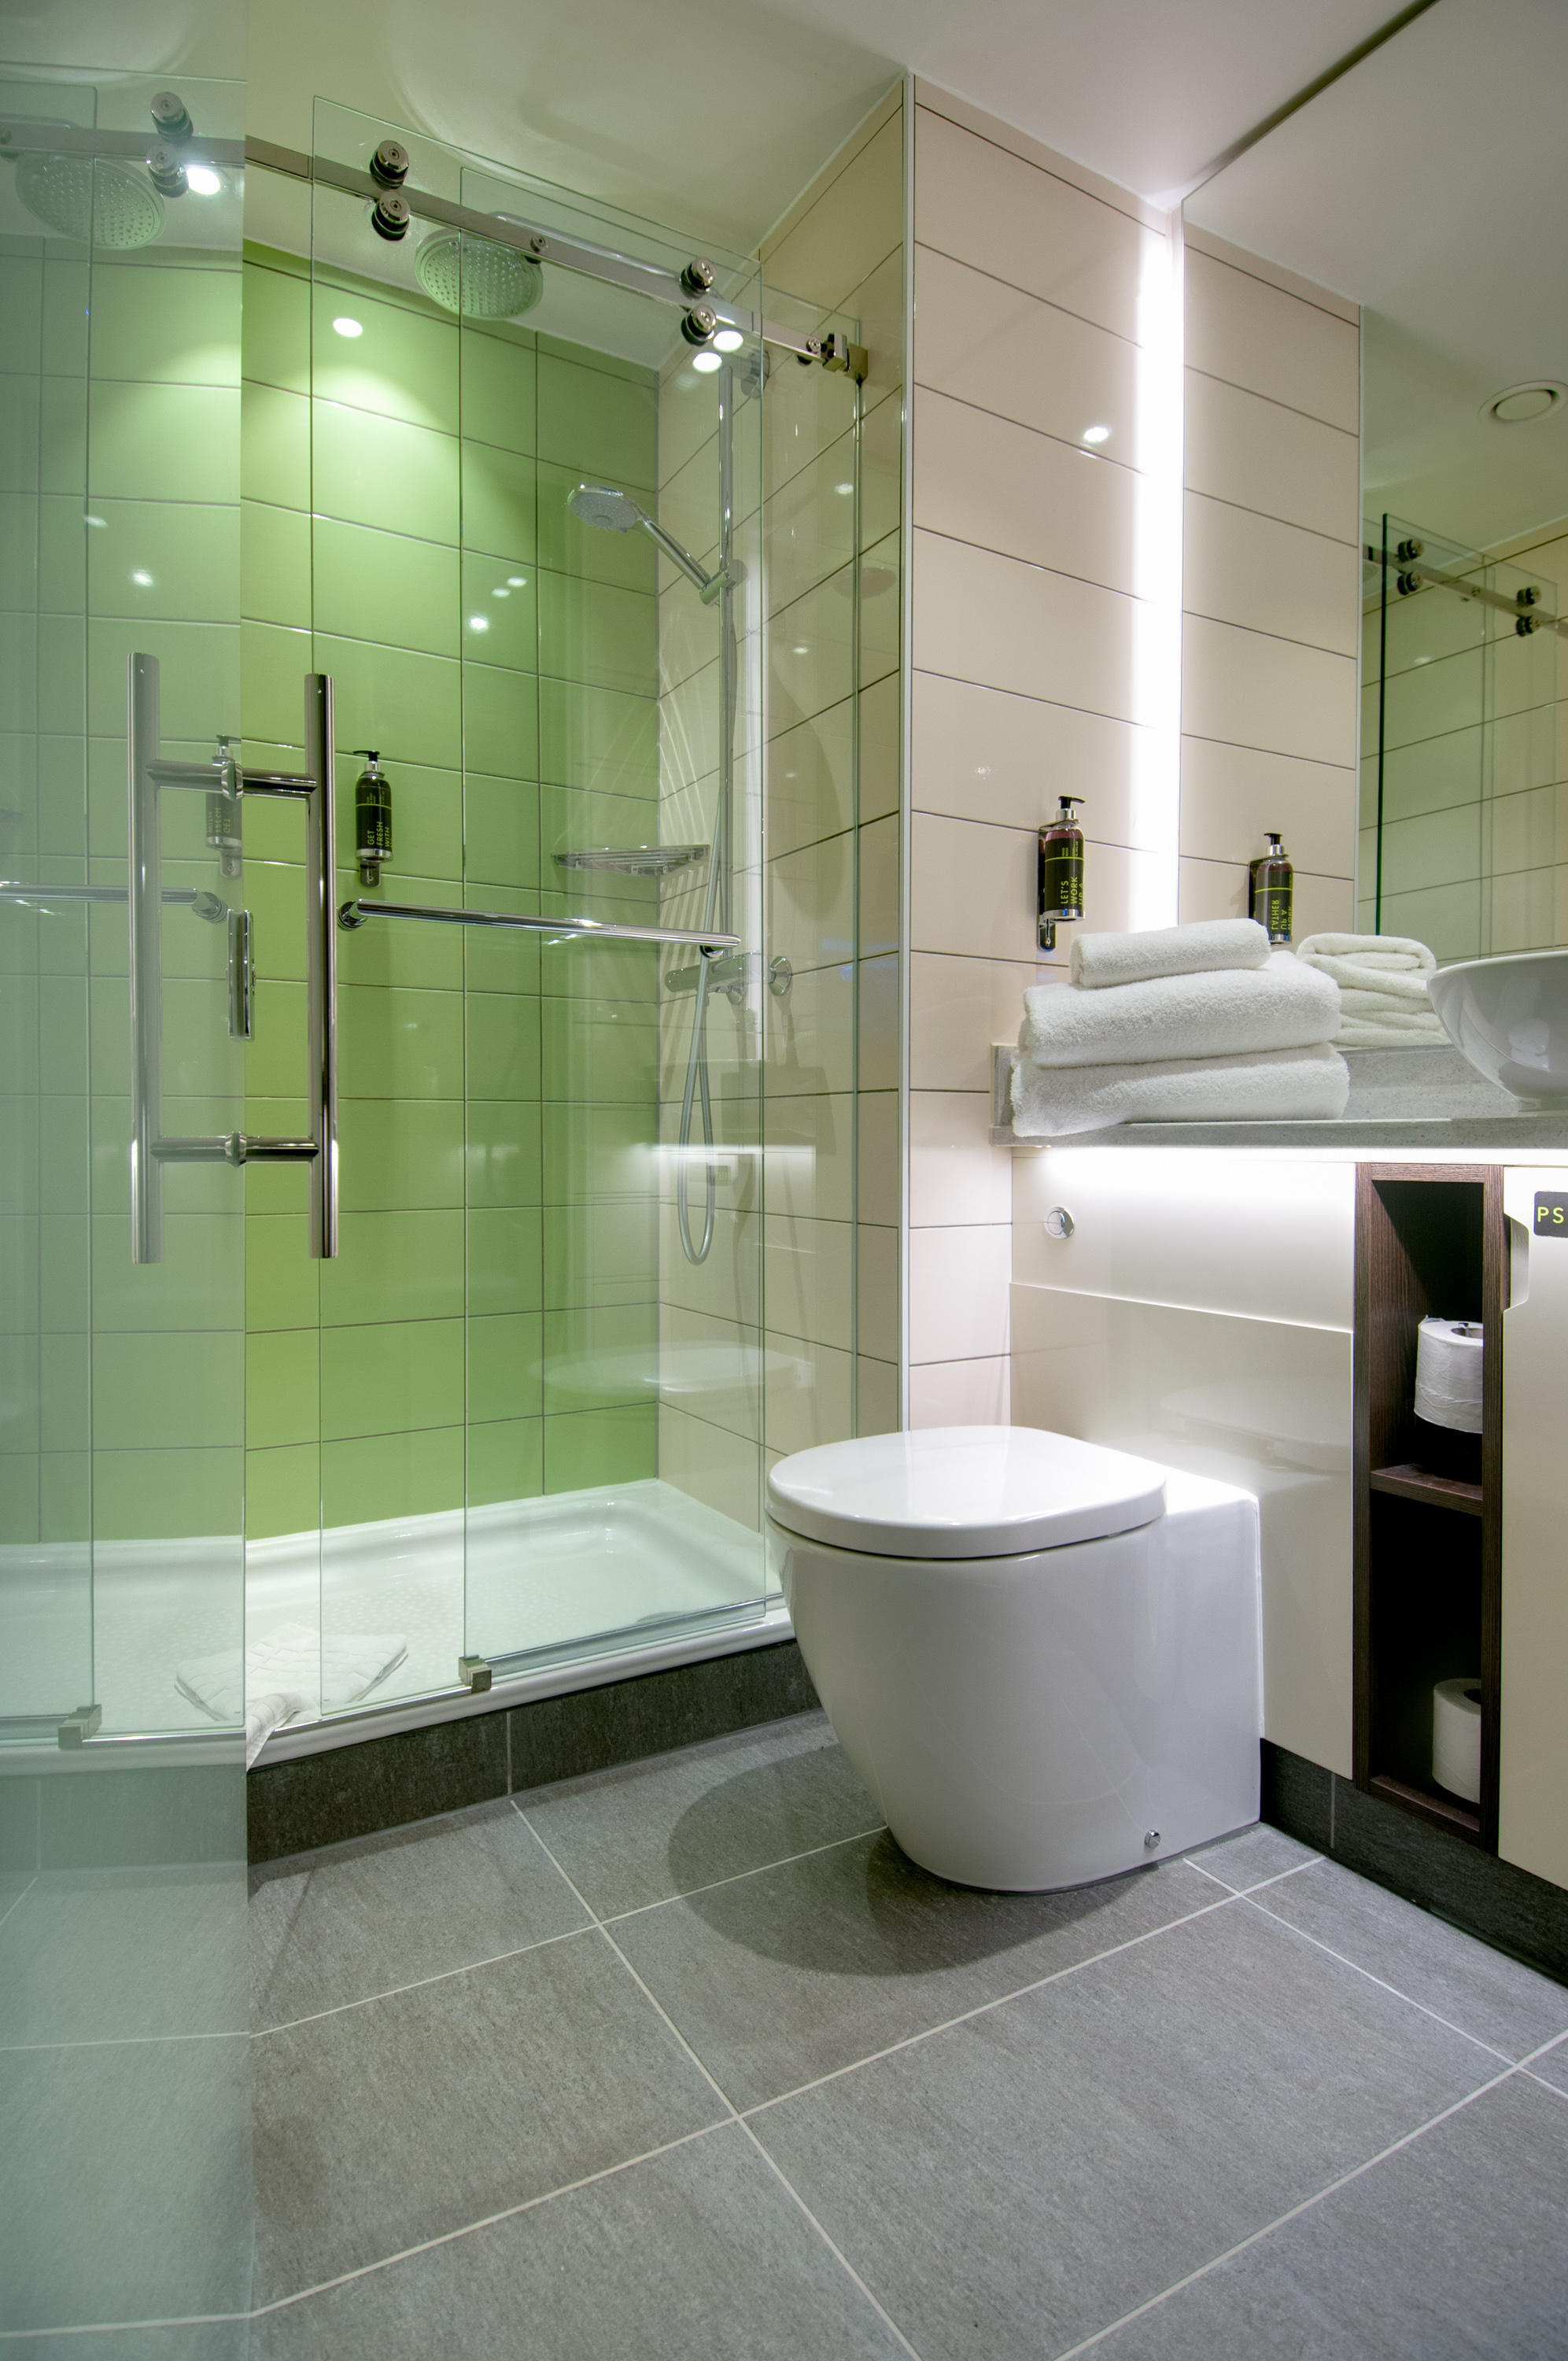 hub by Premier Inn bathroom hub by Premier Inn London Tower Bridge hotel London 08715 279576